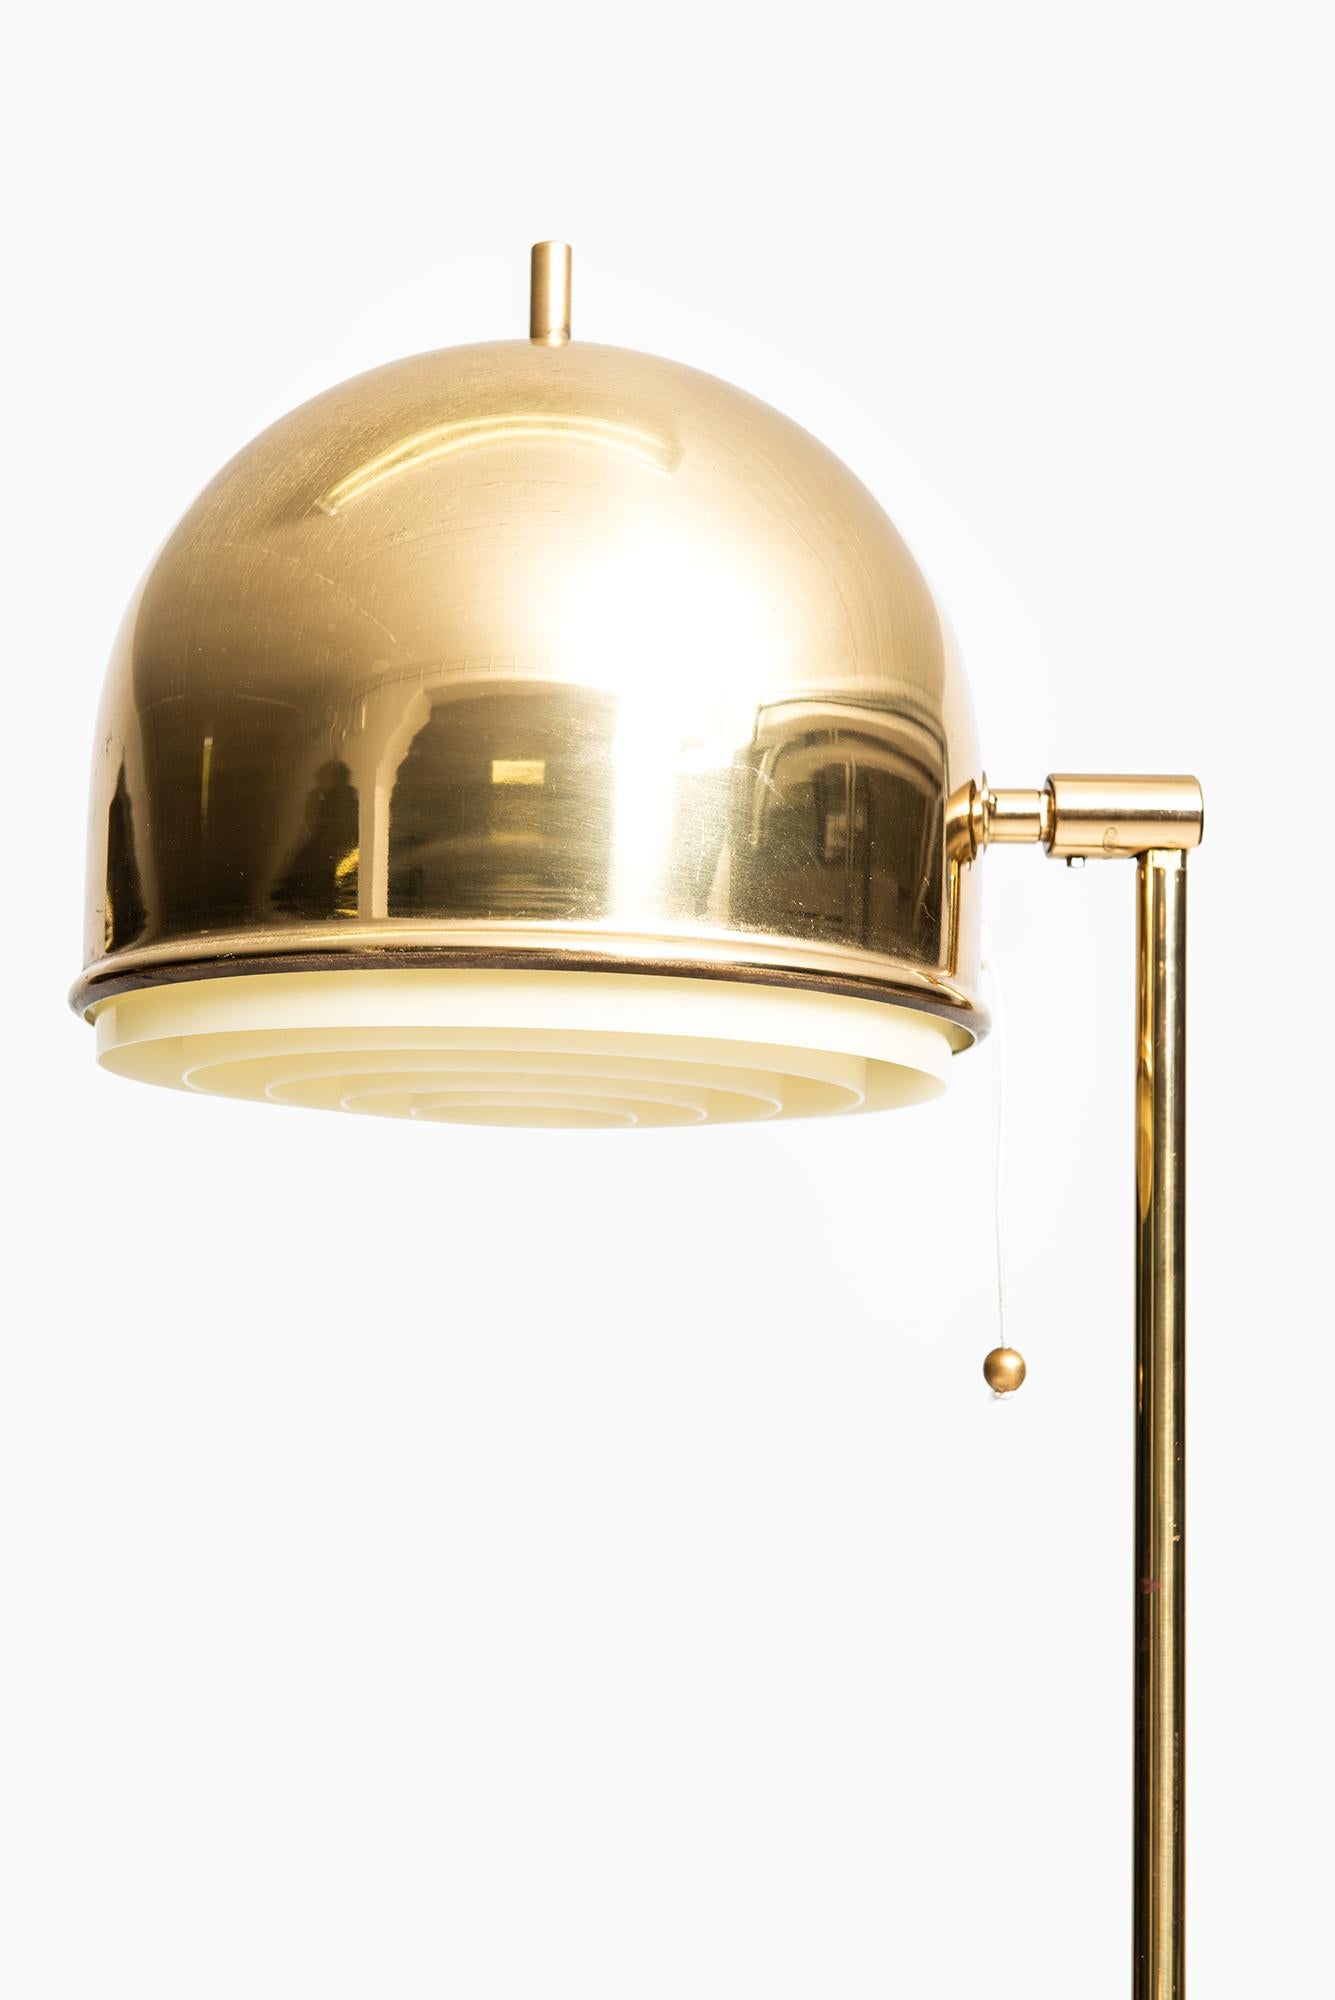 Table lamp model B-075 in brass. Produced by Bergbom in Sweden.